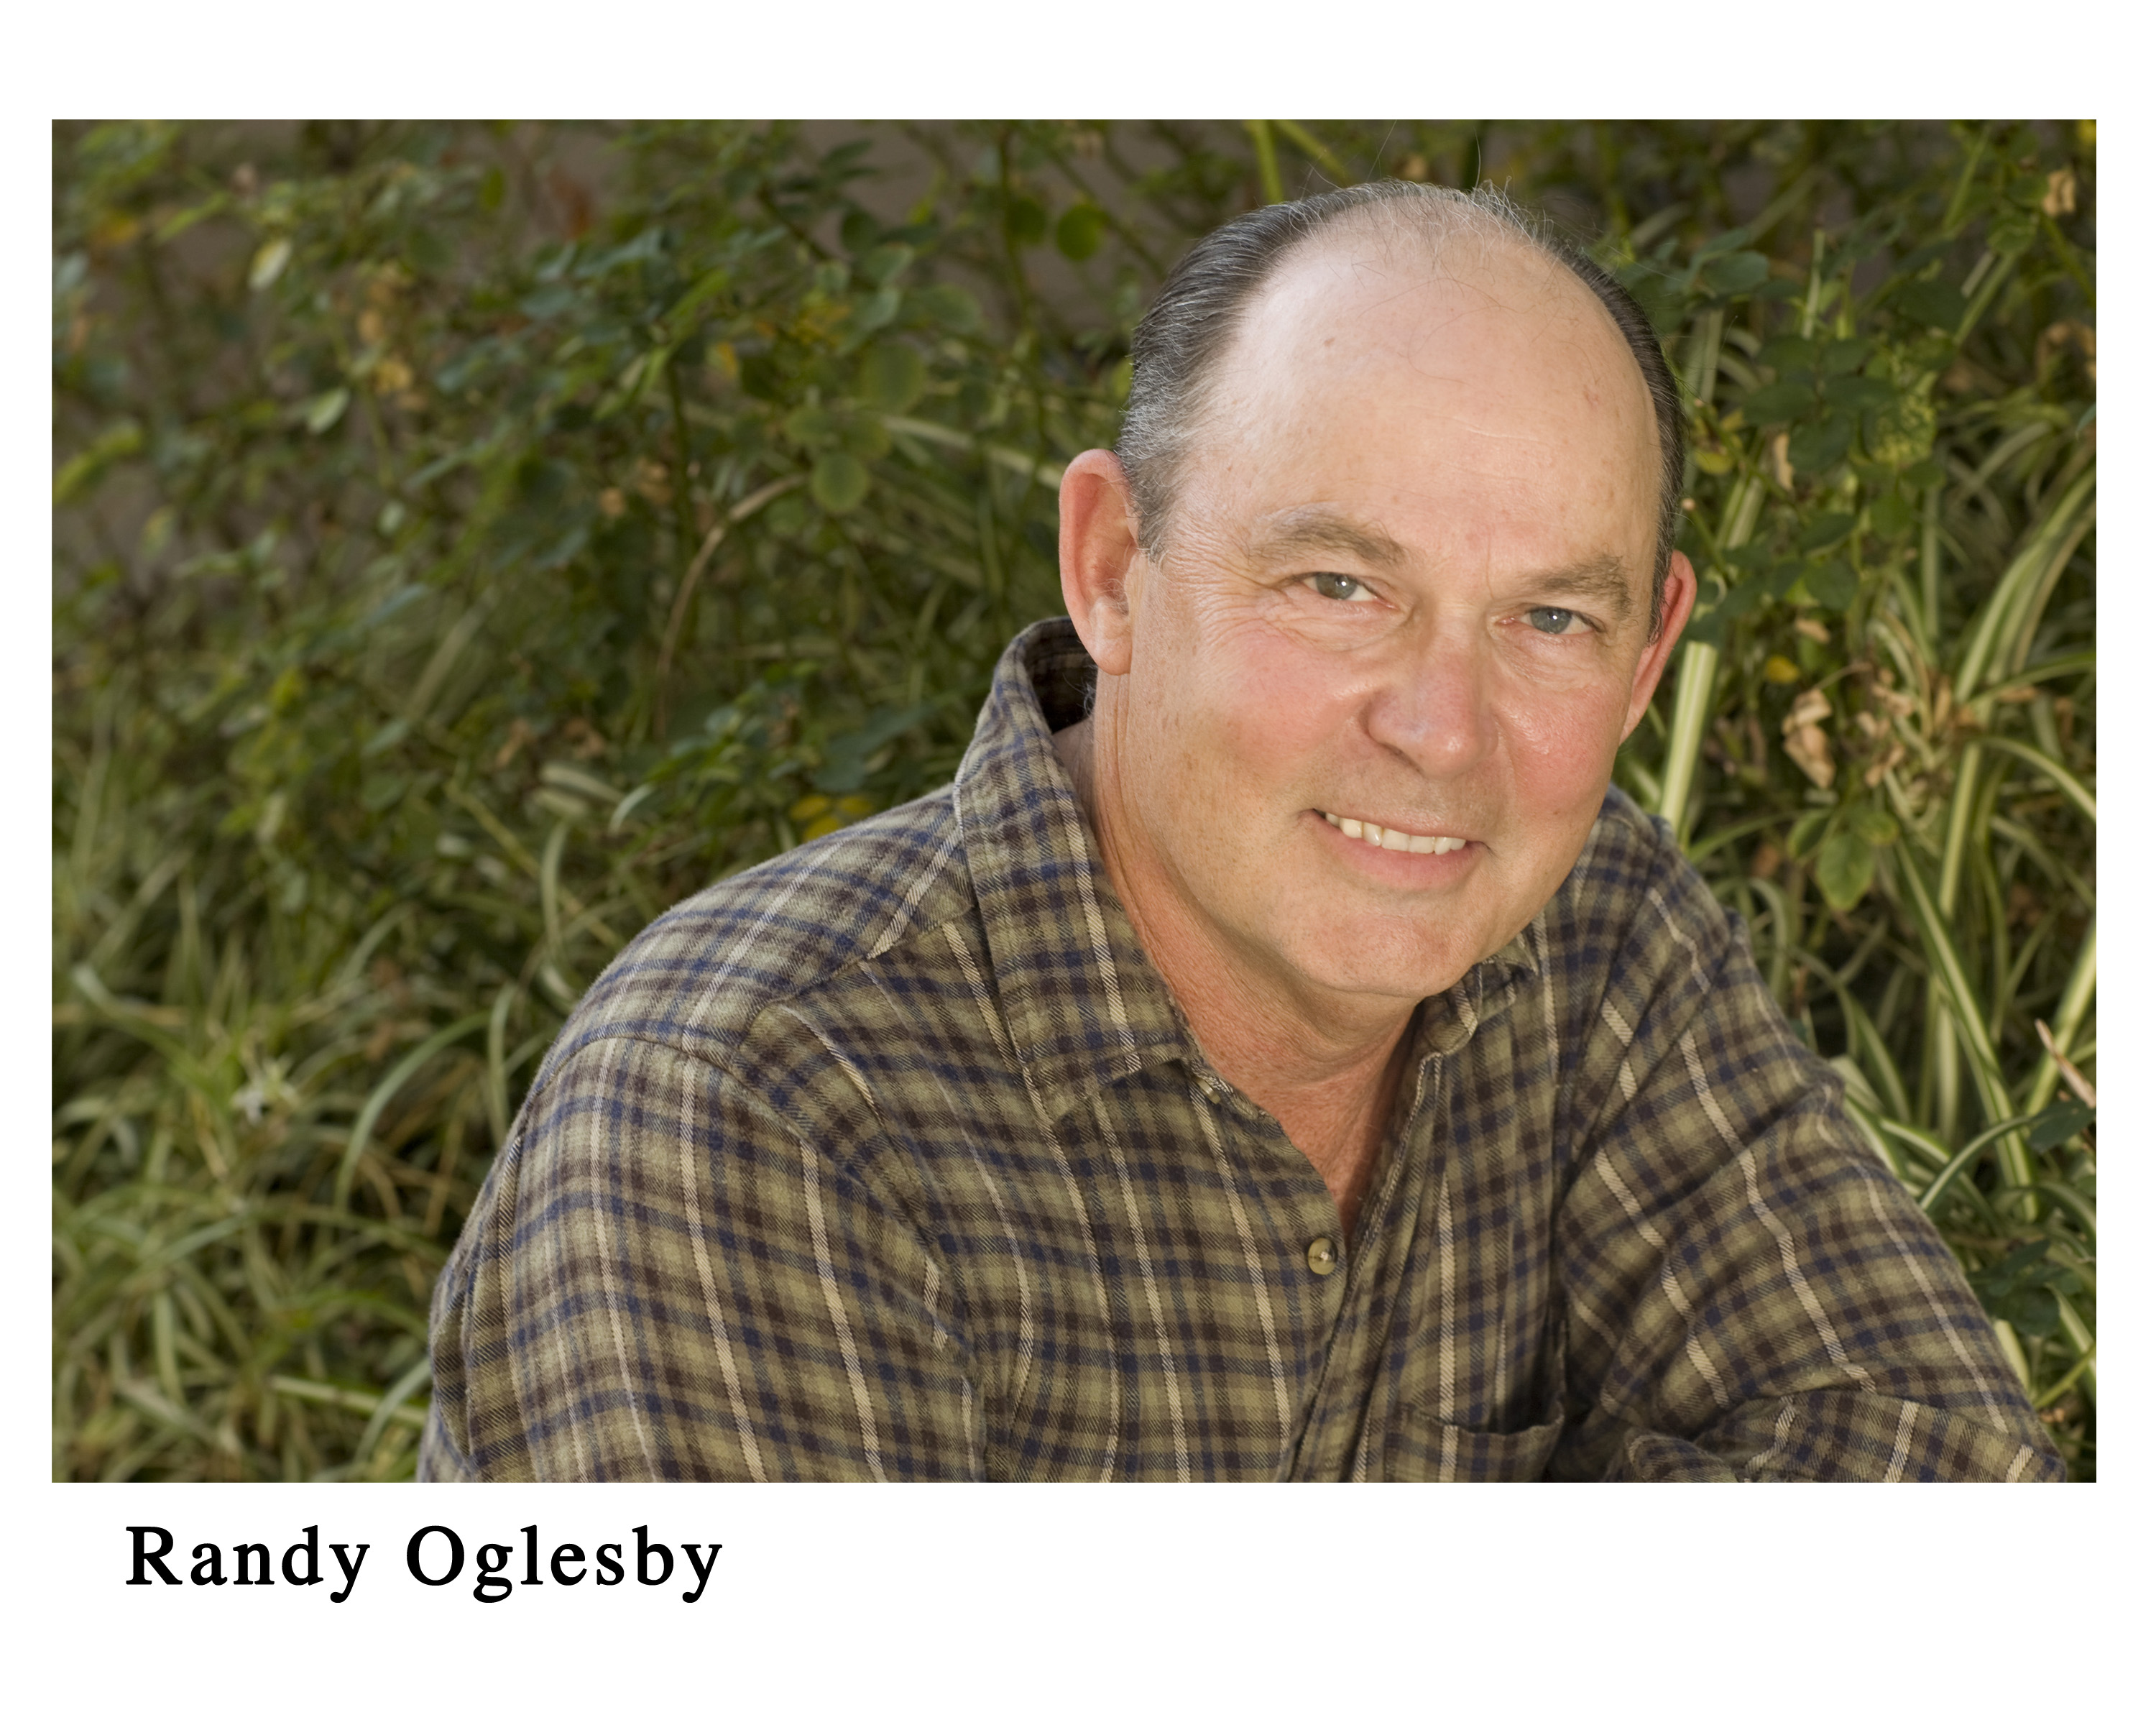 Oglsby, Randy HS8831Rtch-1